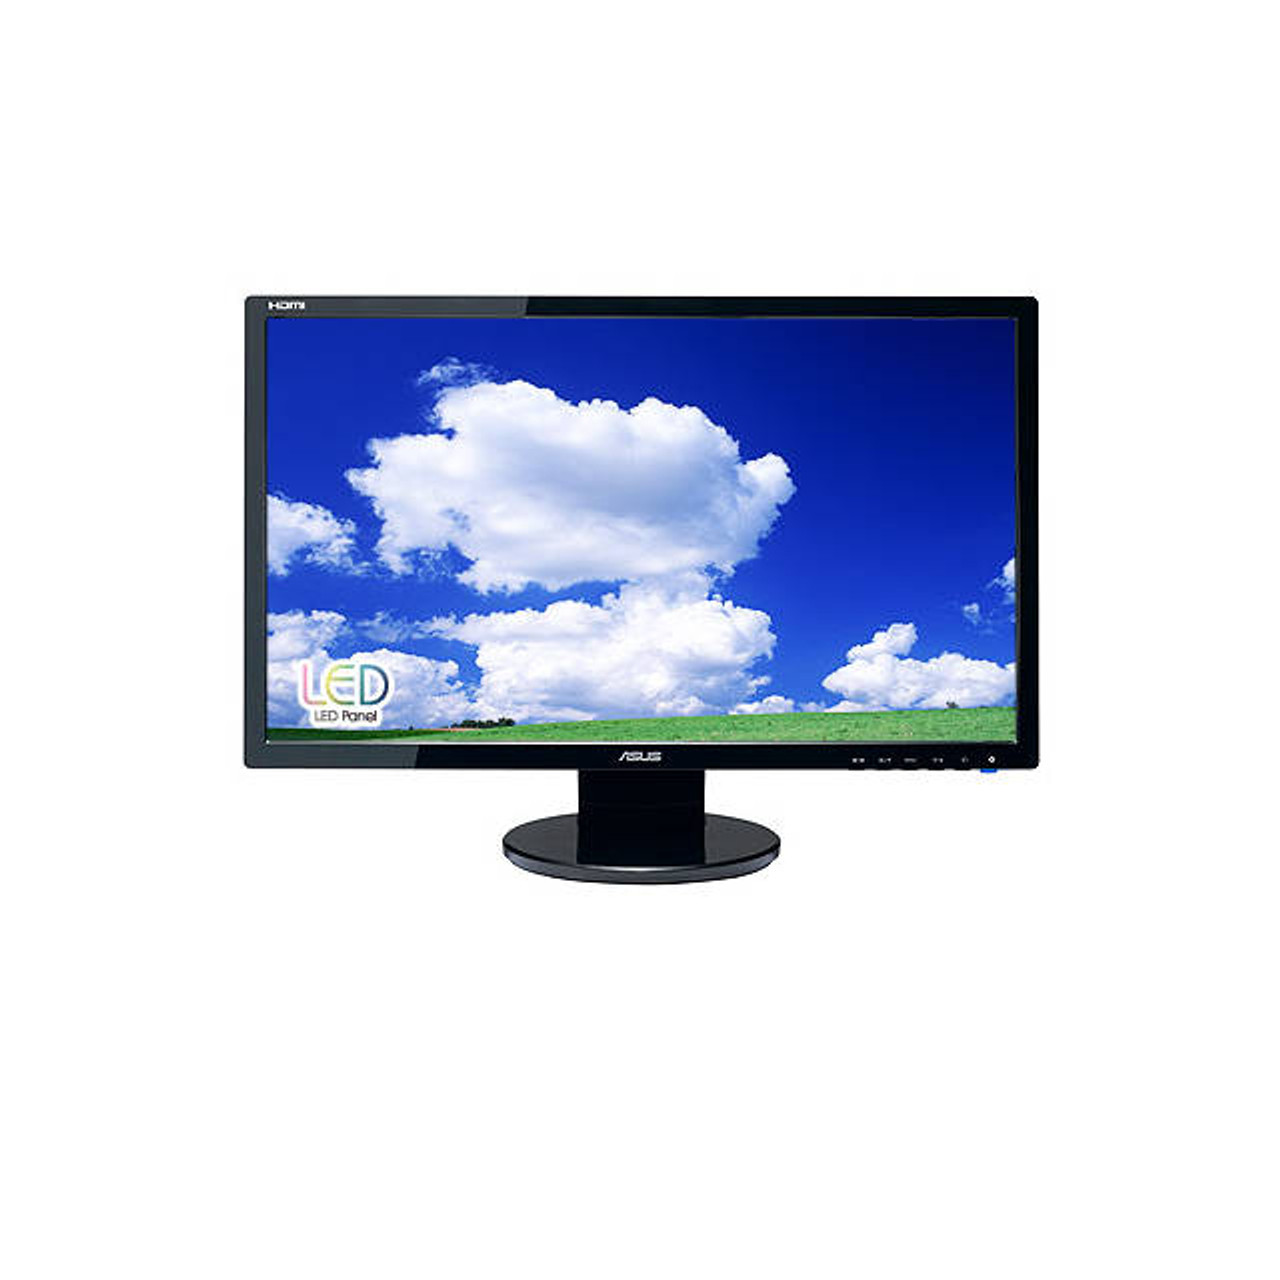 Asus VE248H 24 inch WideScreen 2ms 10,000,000 :1 VGA/DVI/HDMI LCD Monitor w/ Speakers (Black)